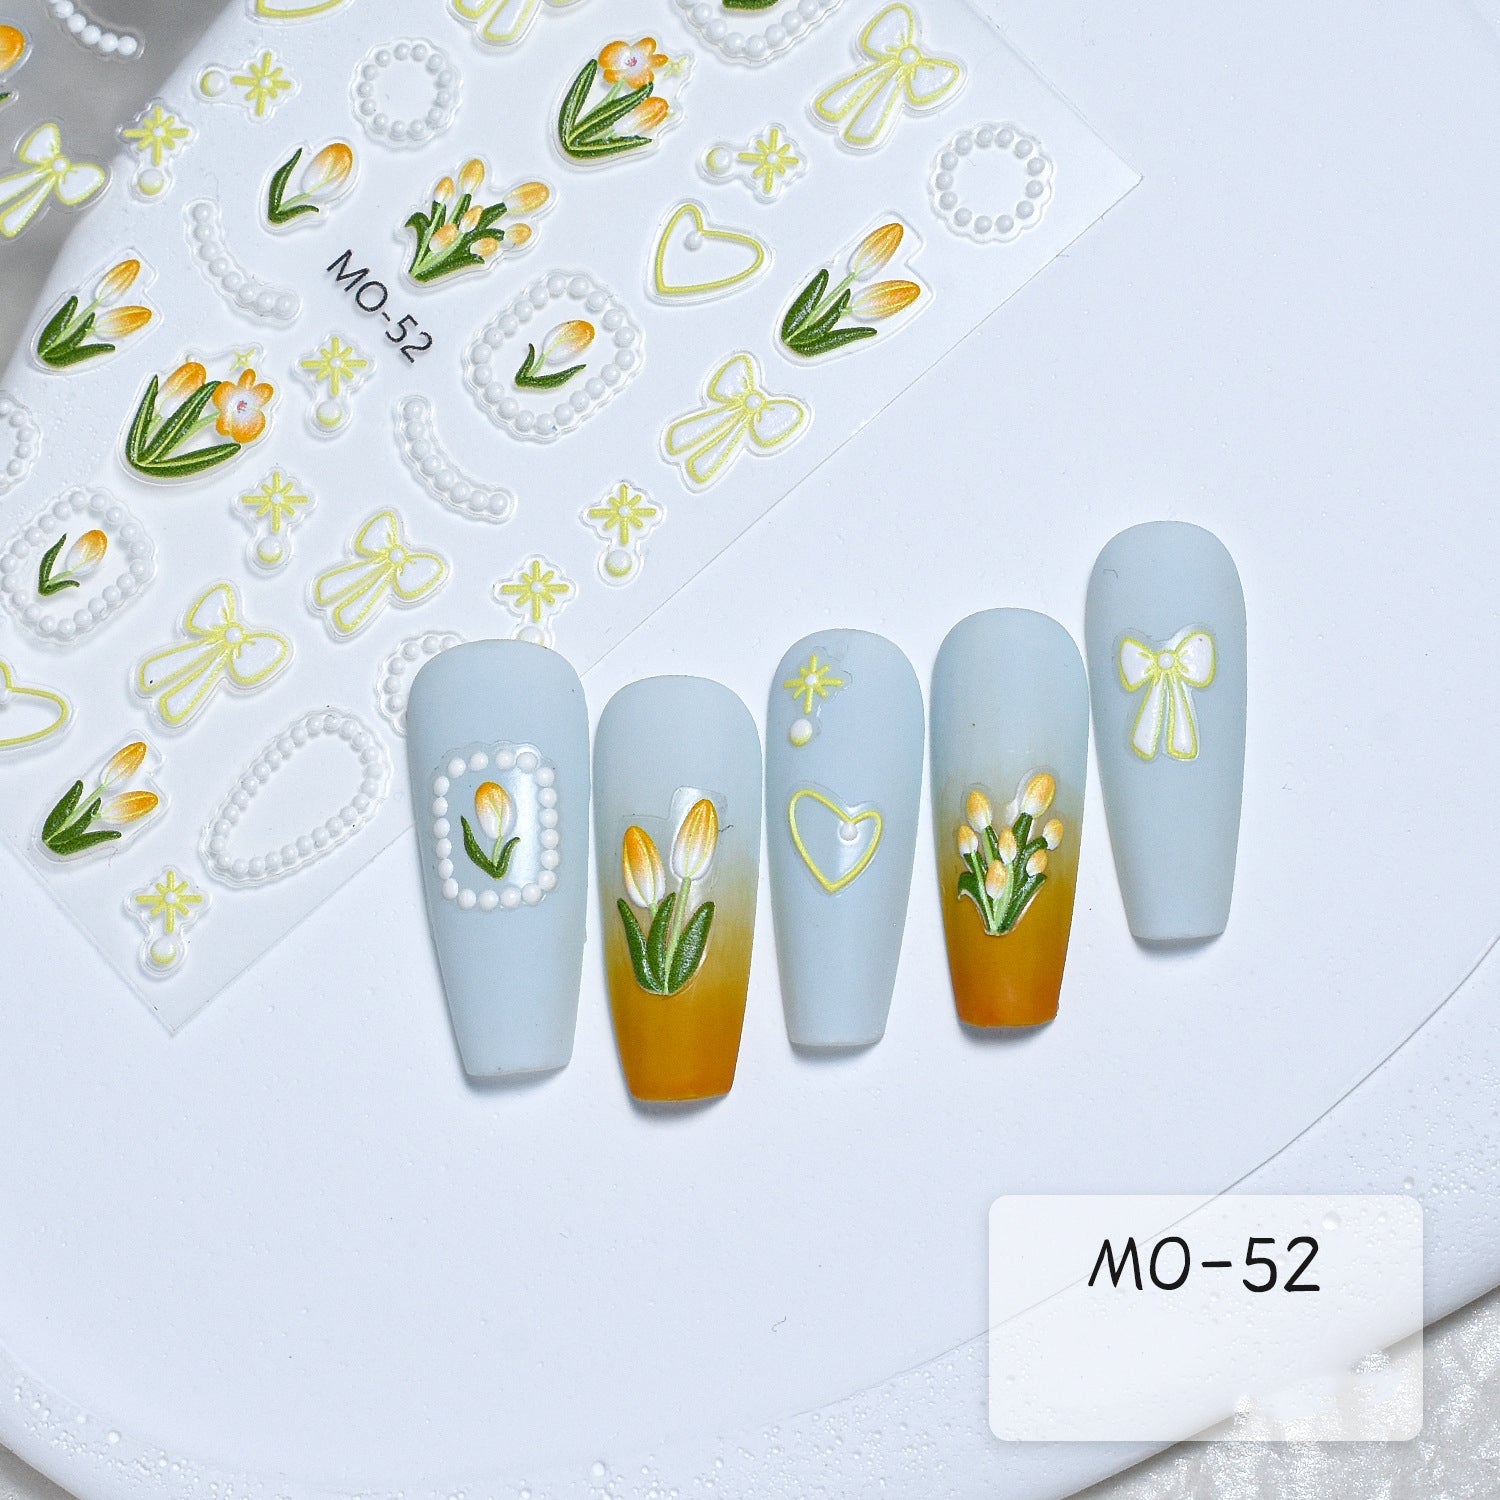 Nail Art Stickers MO-52